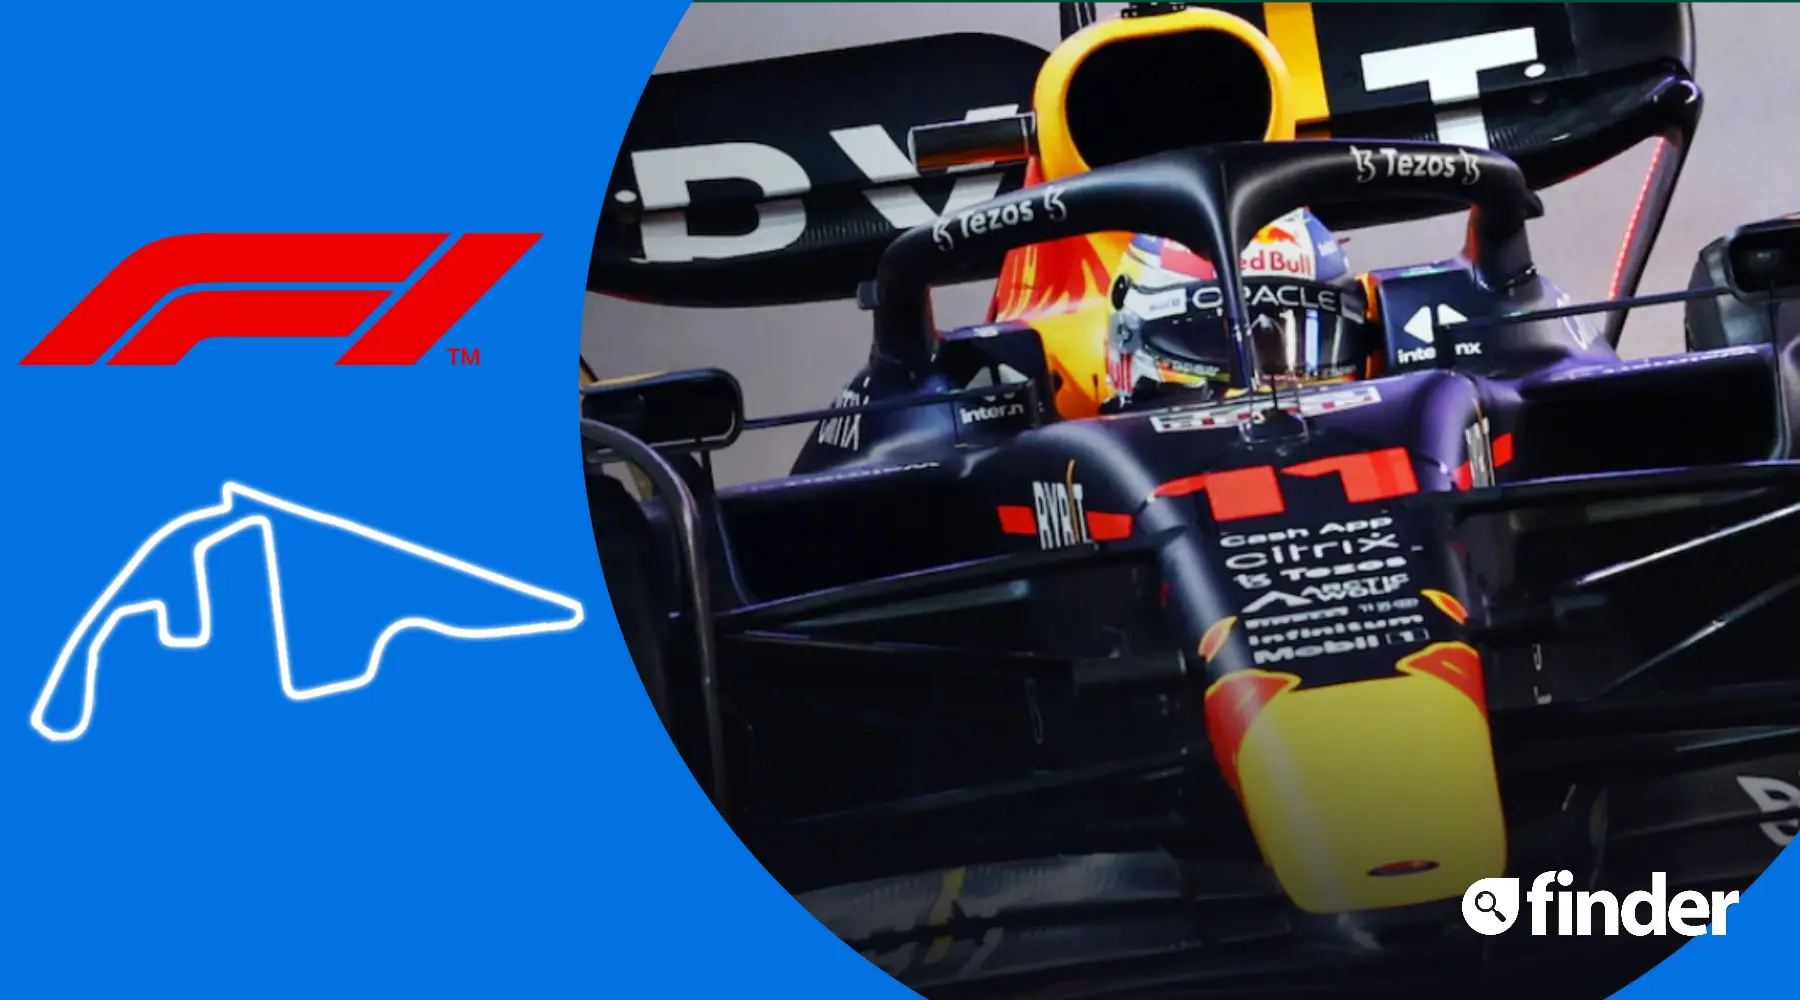 F1 Abu Dhabi Grand Prix How to watch live and free in Australia